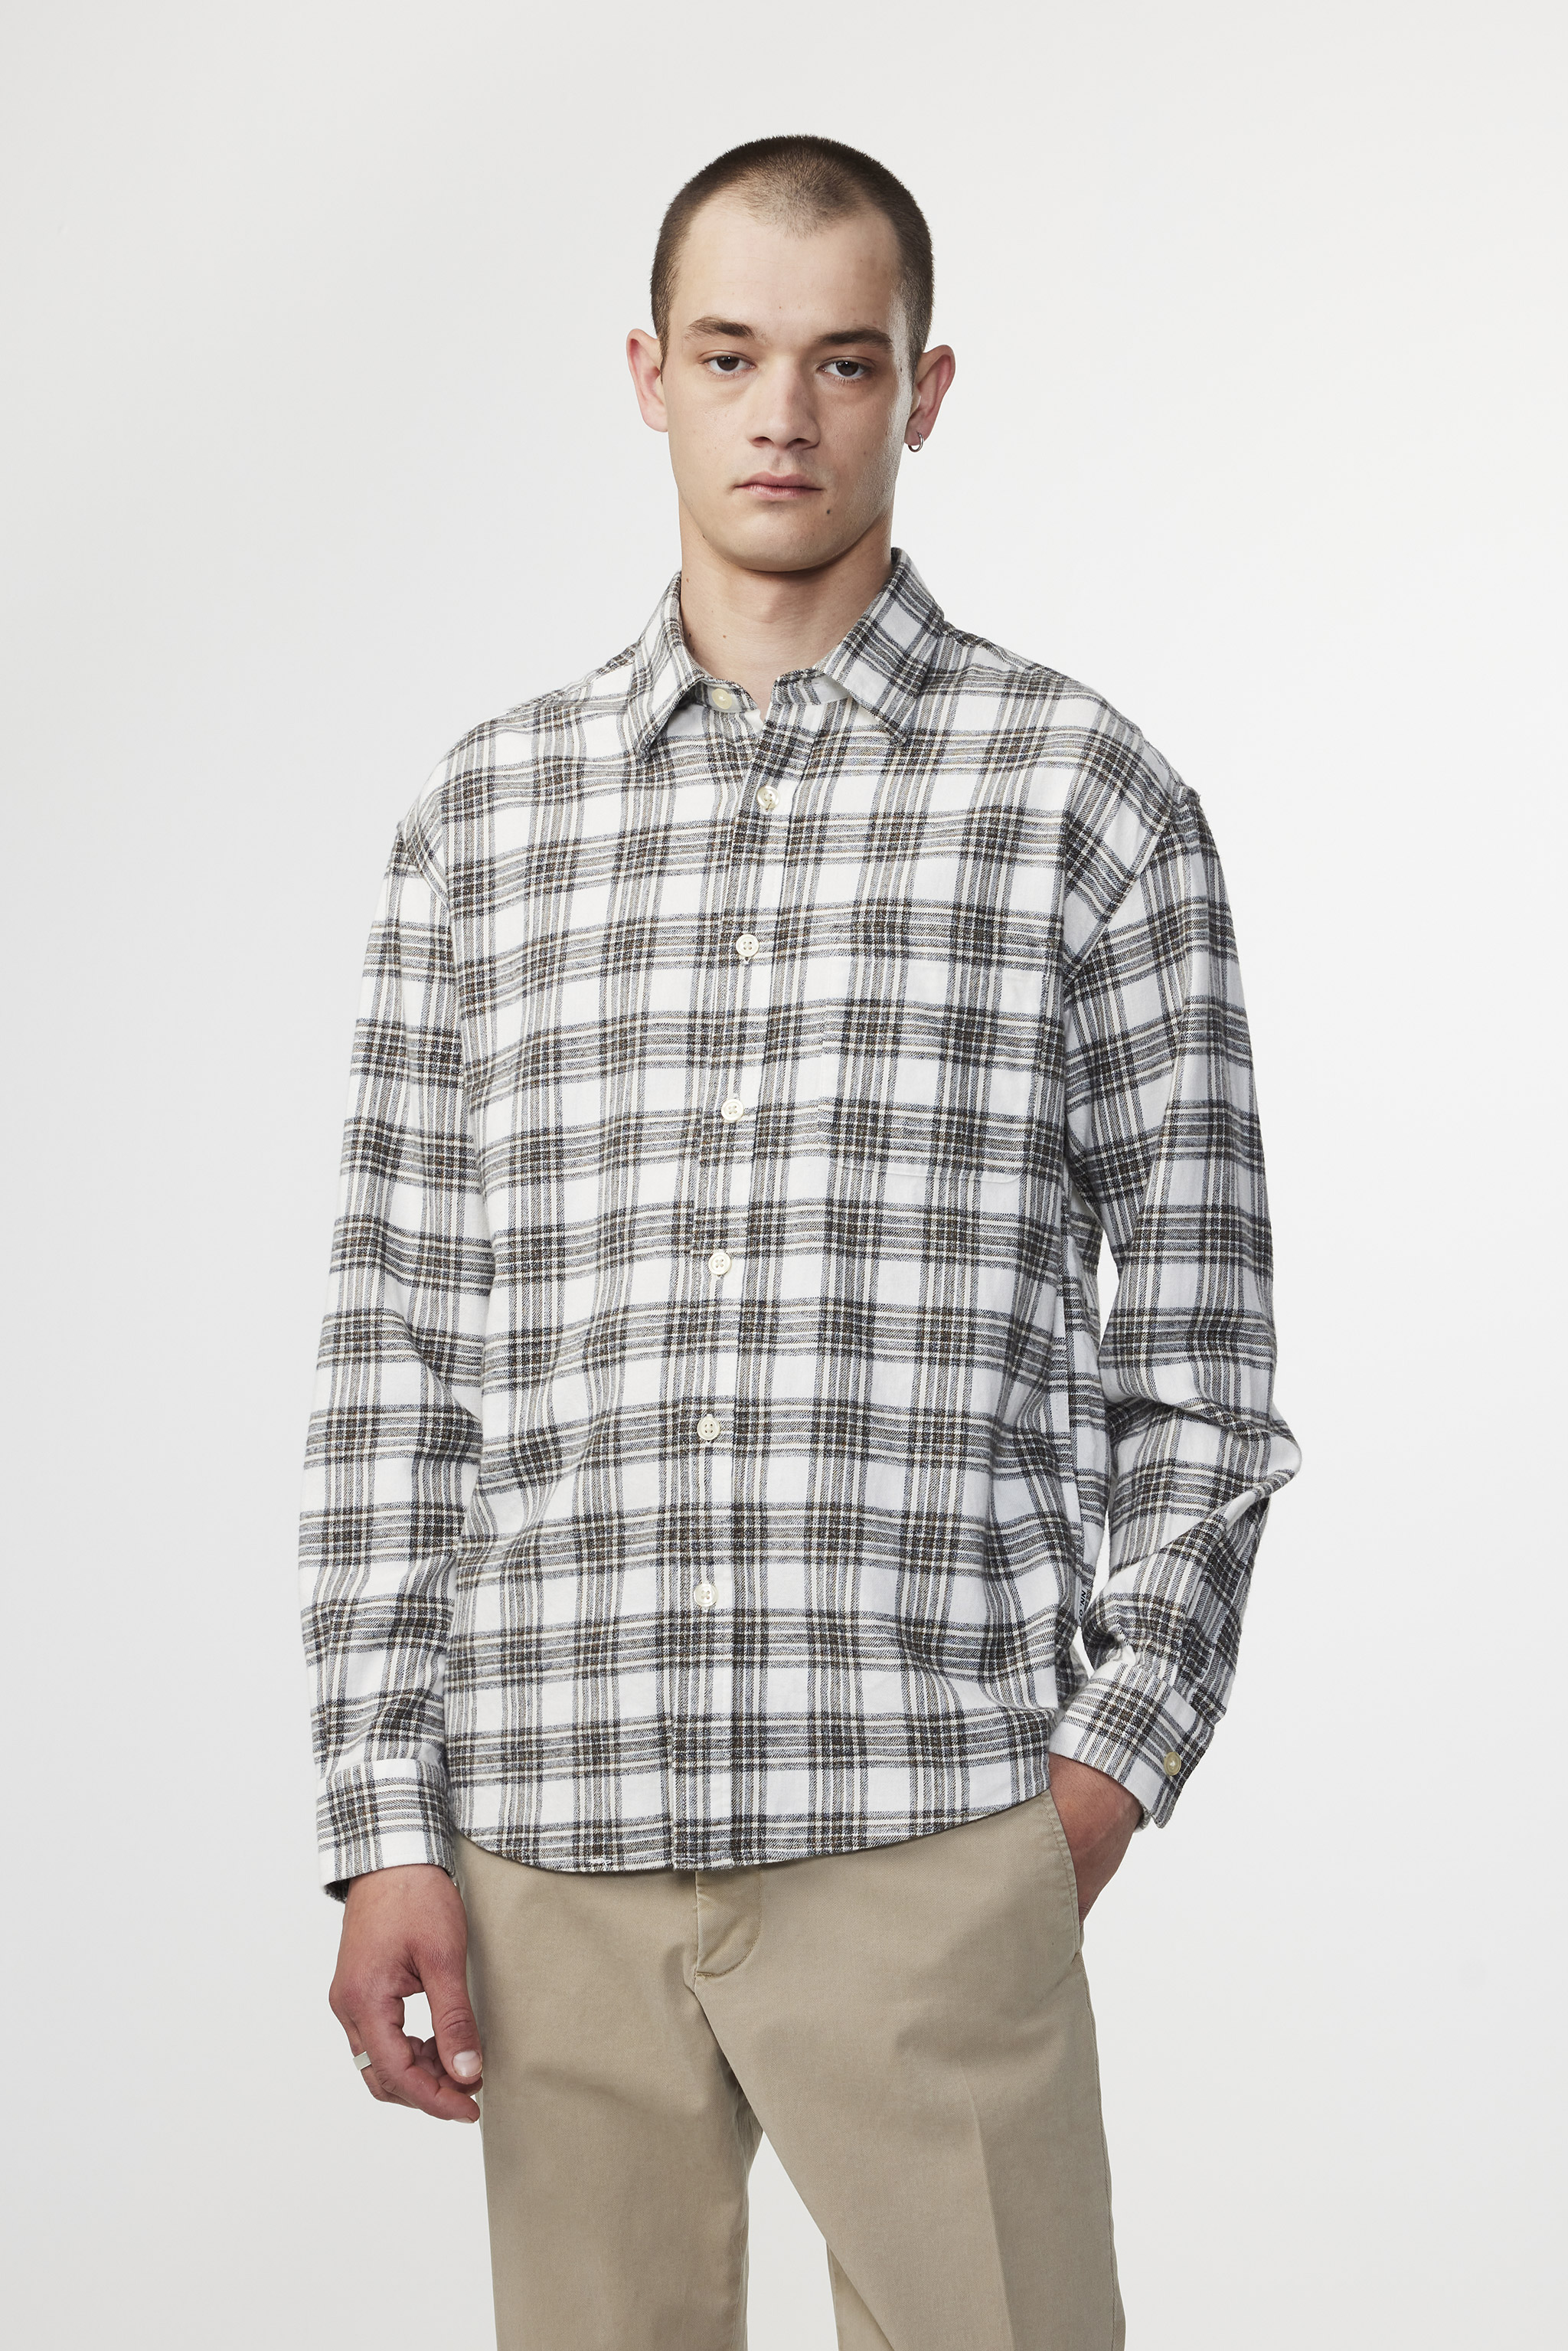 Deon 5465 men's shirt - Multi - Buy online at NN.07®